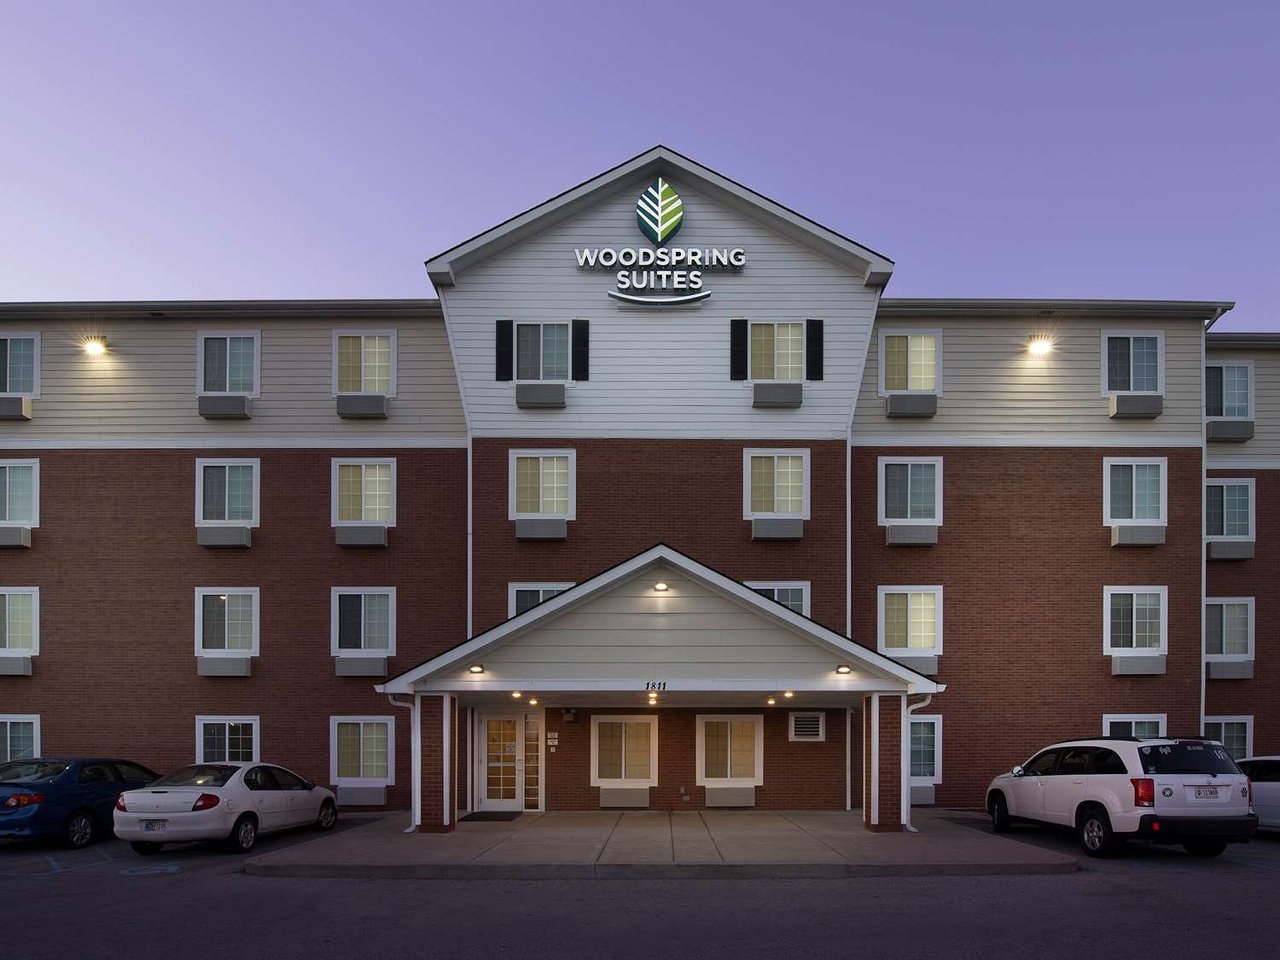 Photo of WoodSpring Suites Louisville Clarksville, Clarksville, IN